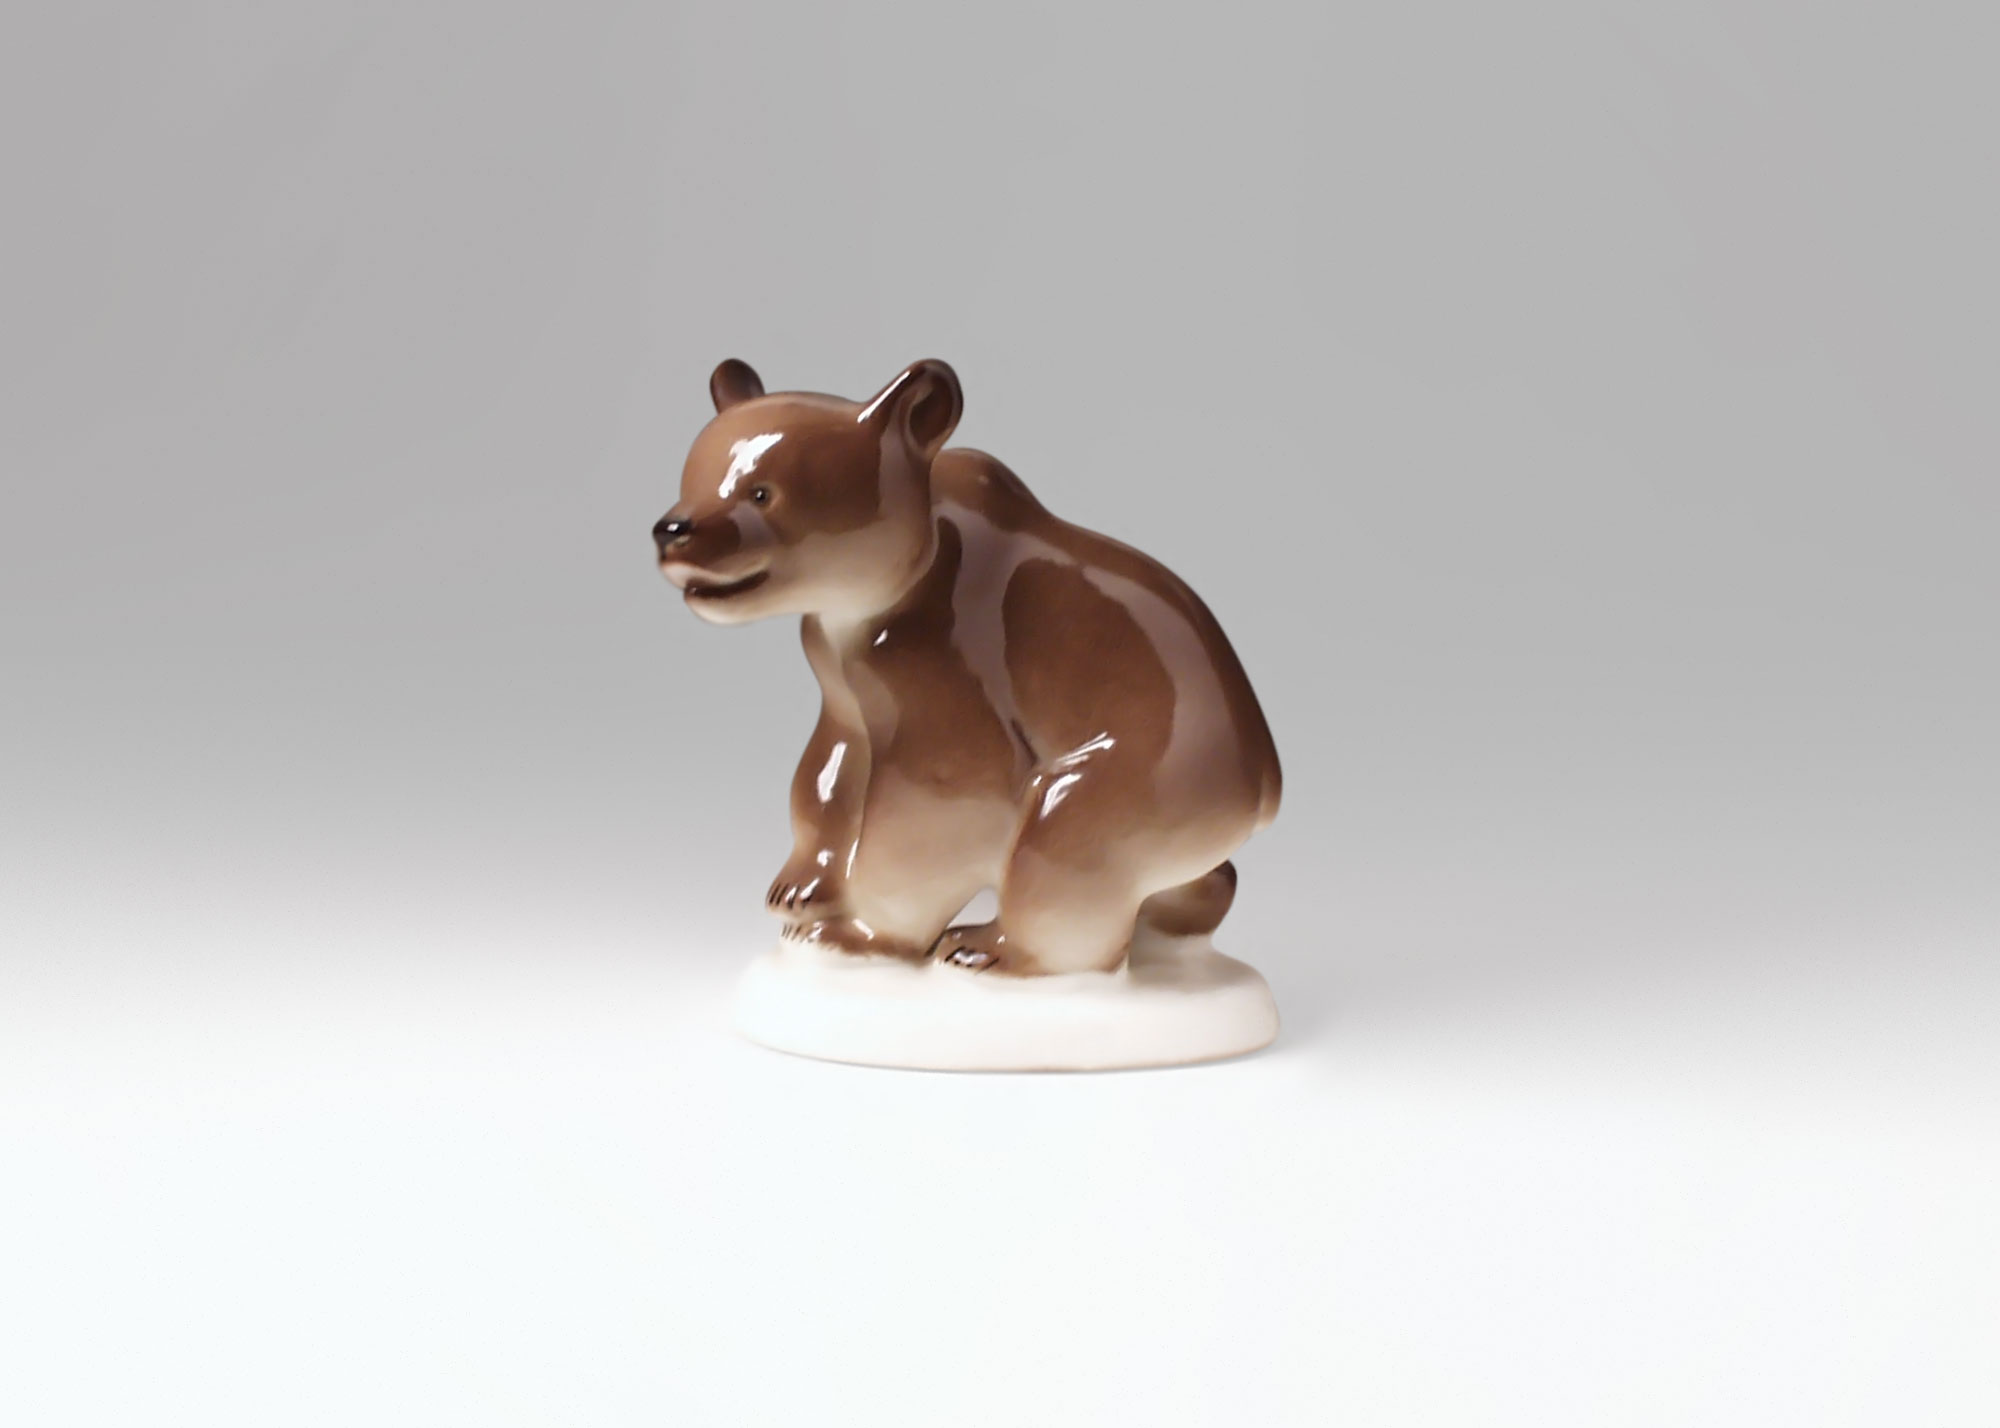 Buy Grizzly Bear Cub Figurine at GoldenCockerel.com